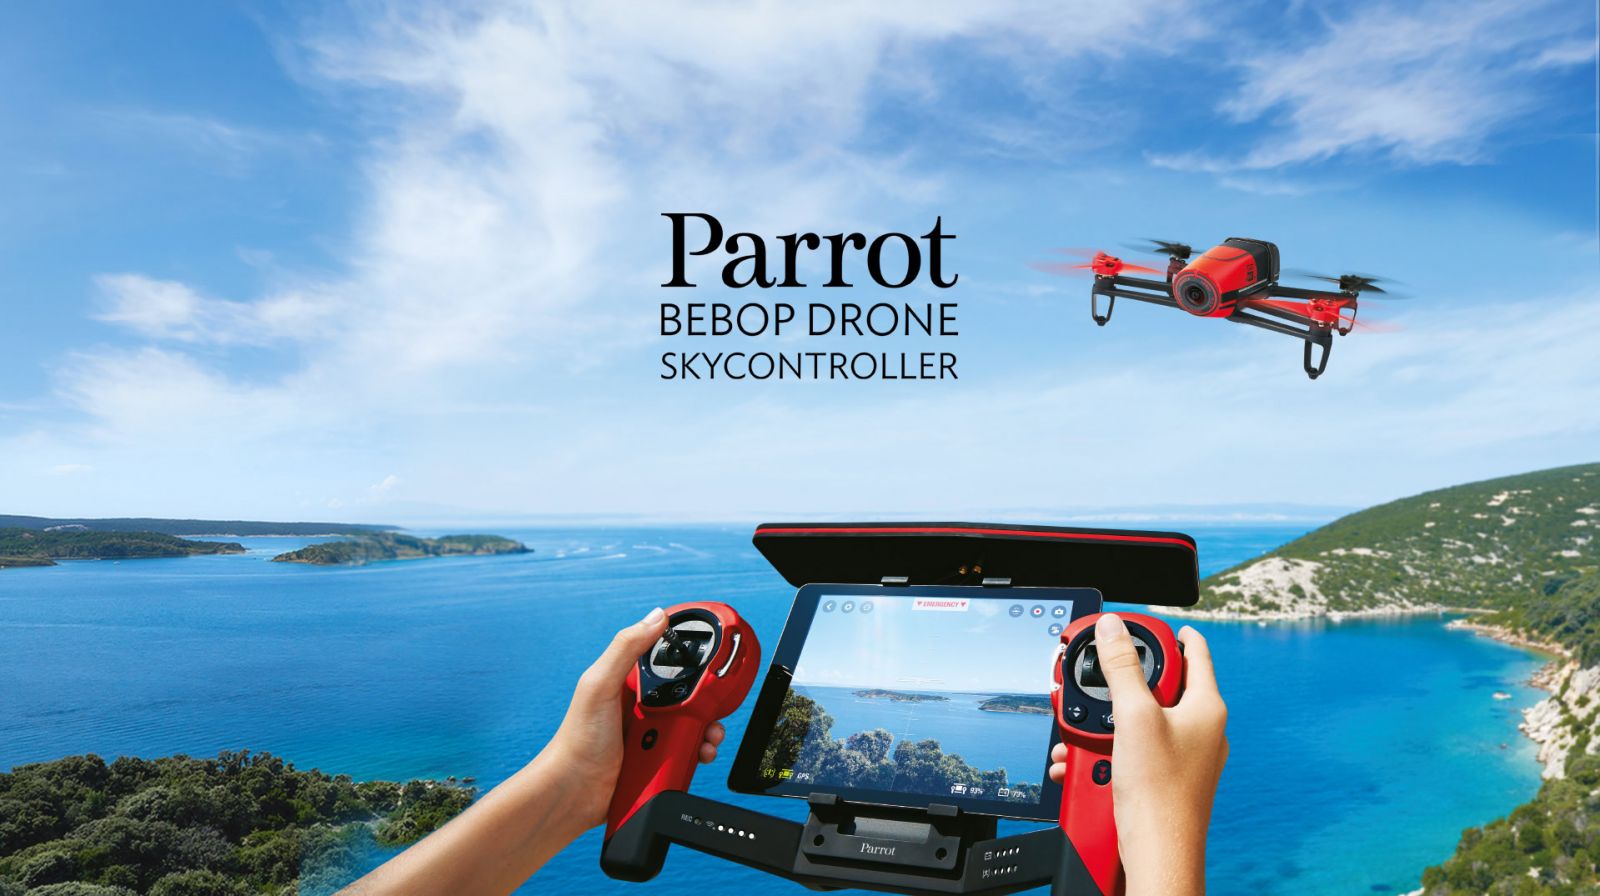 Parrot Bebop Drone + Skycontroller image1